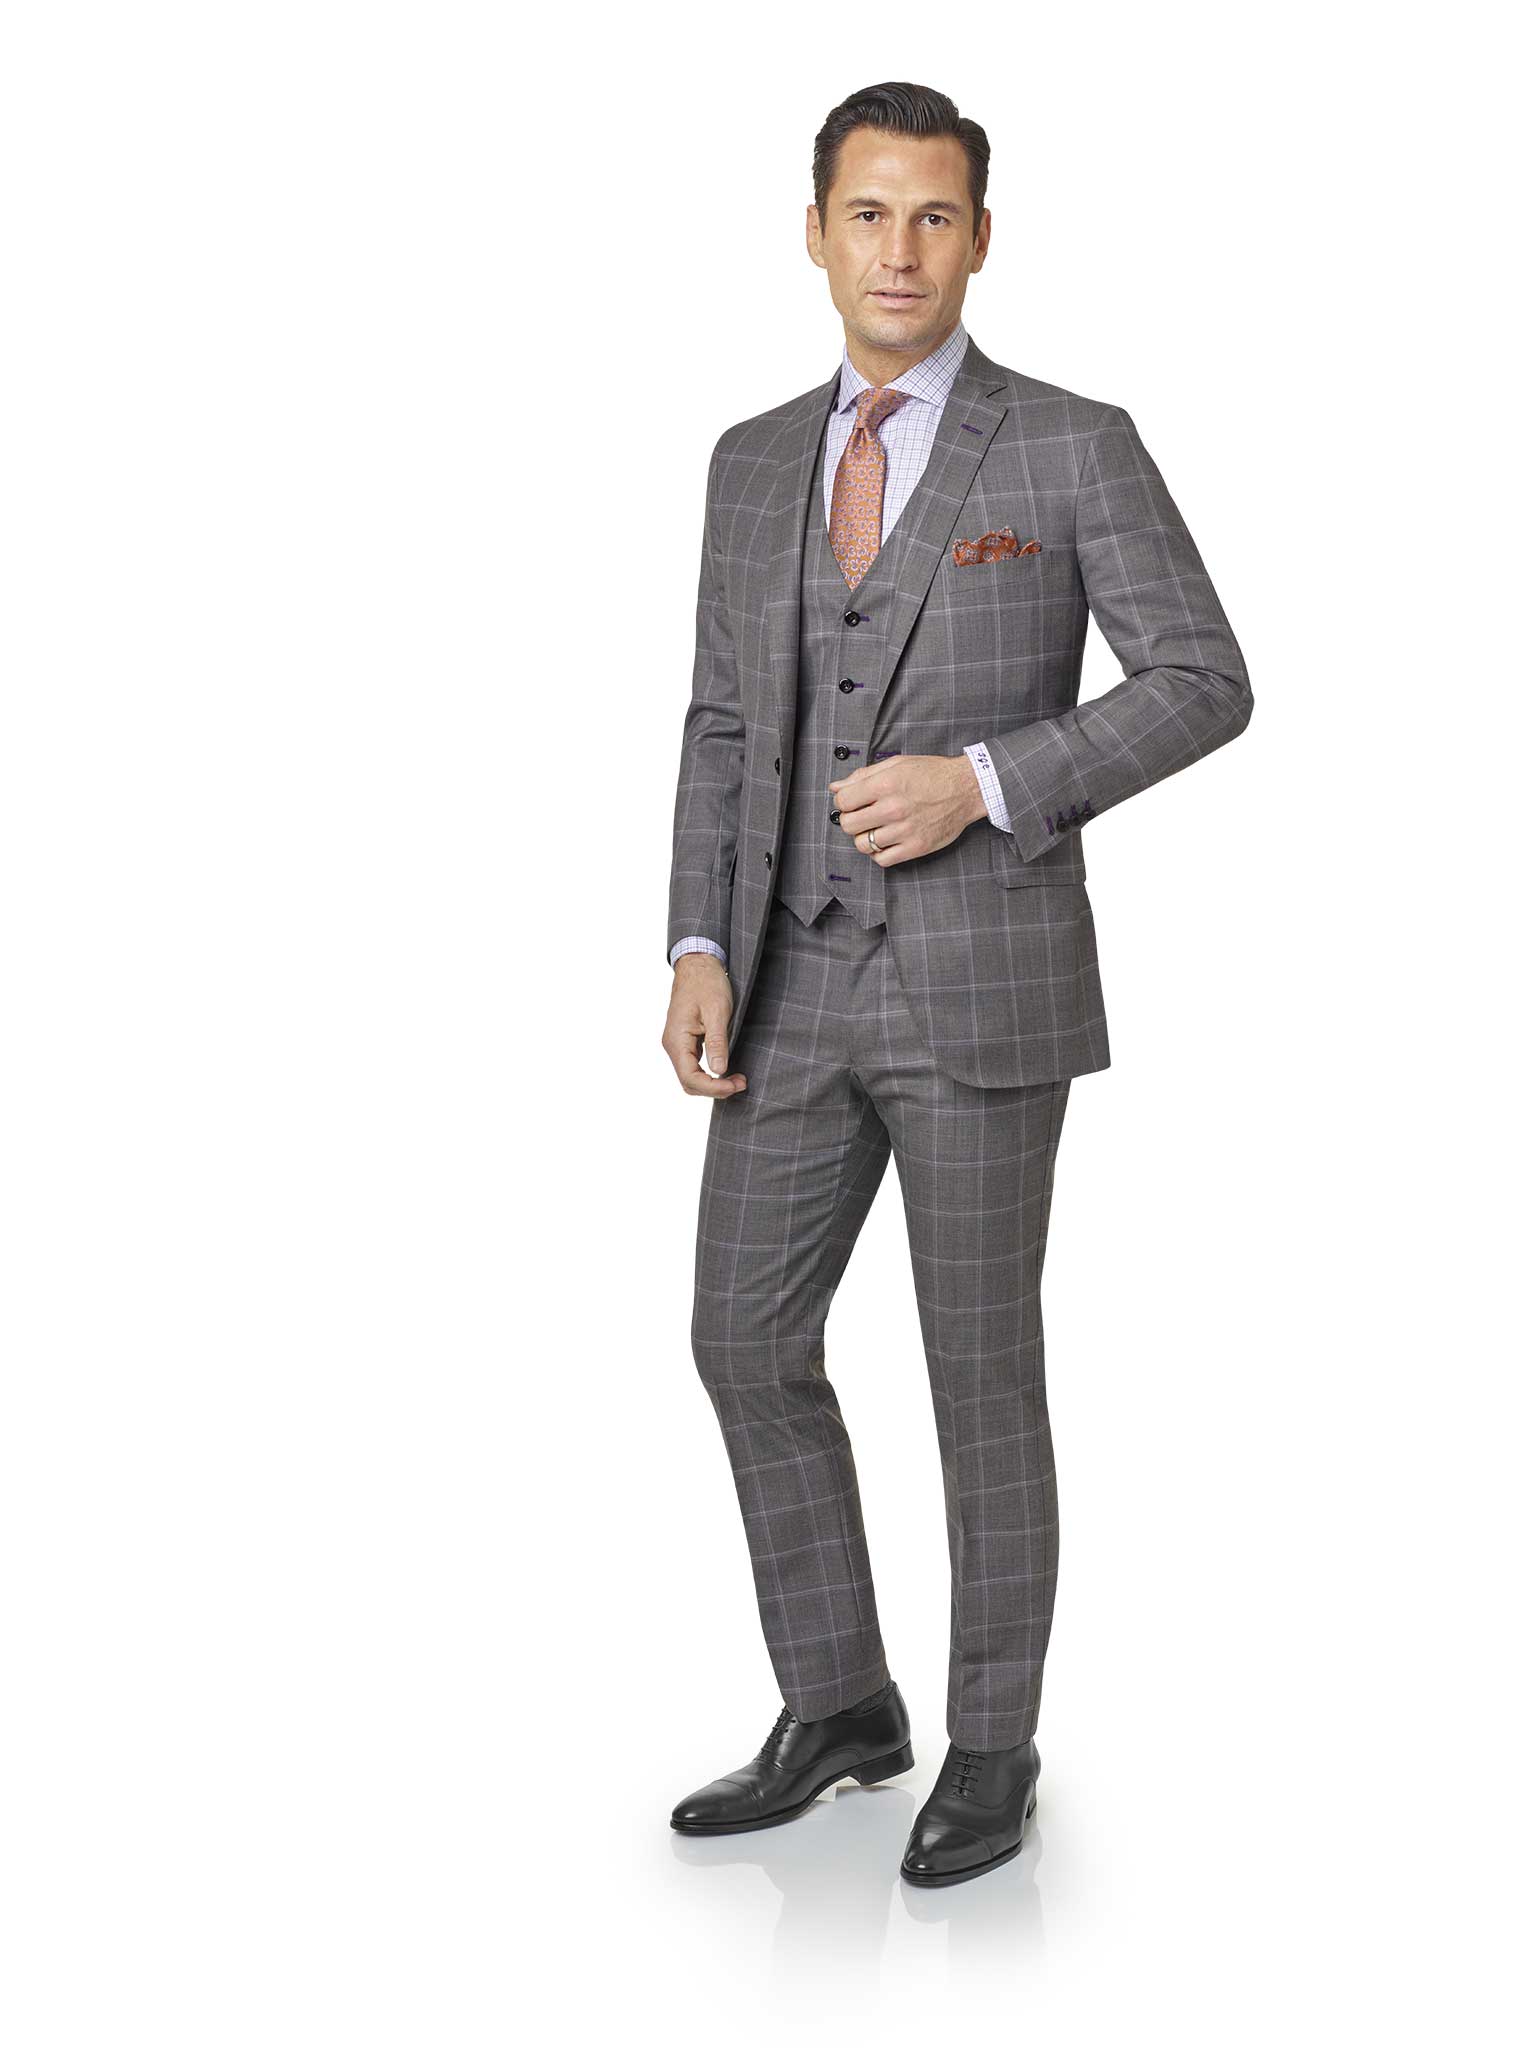 Custom Gray Windowpane Suit